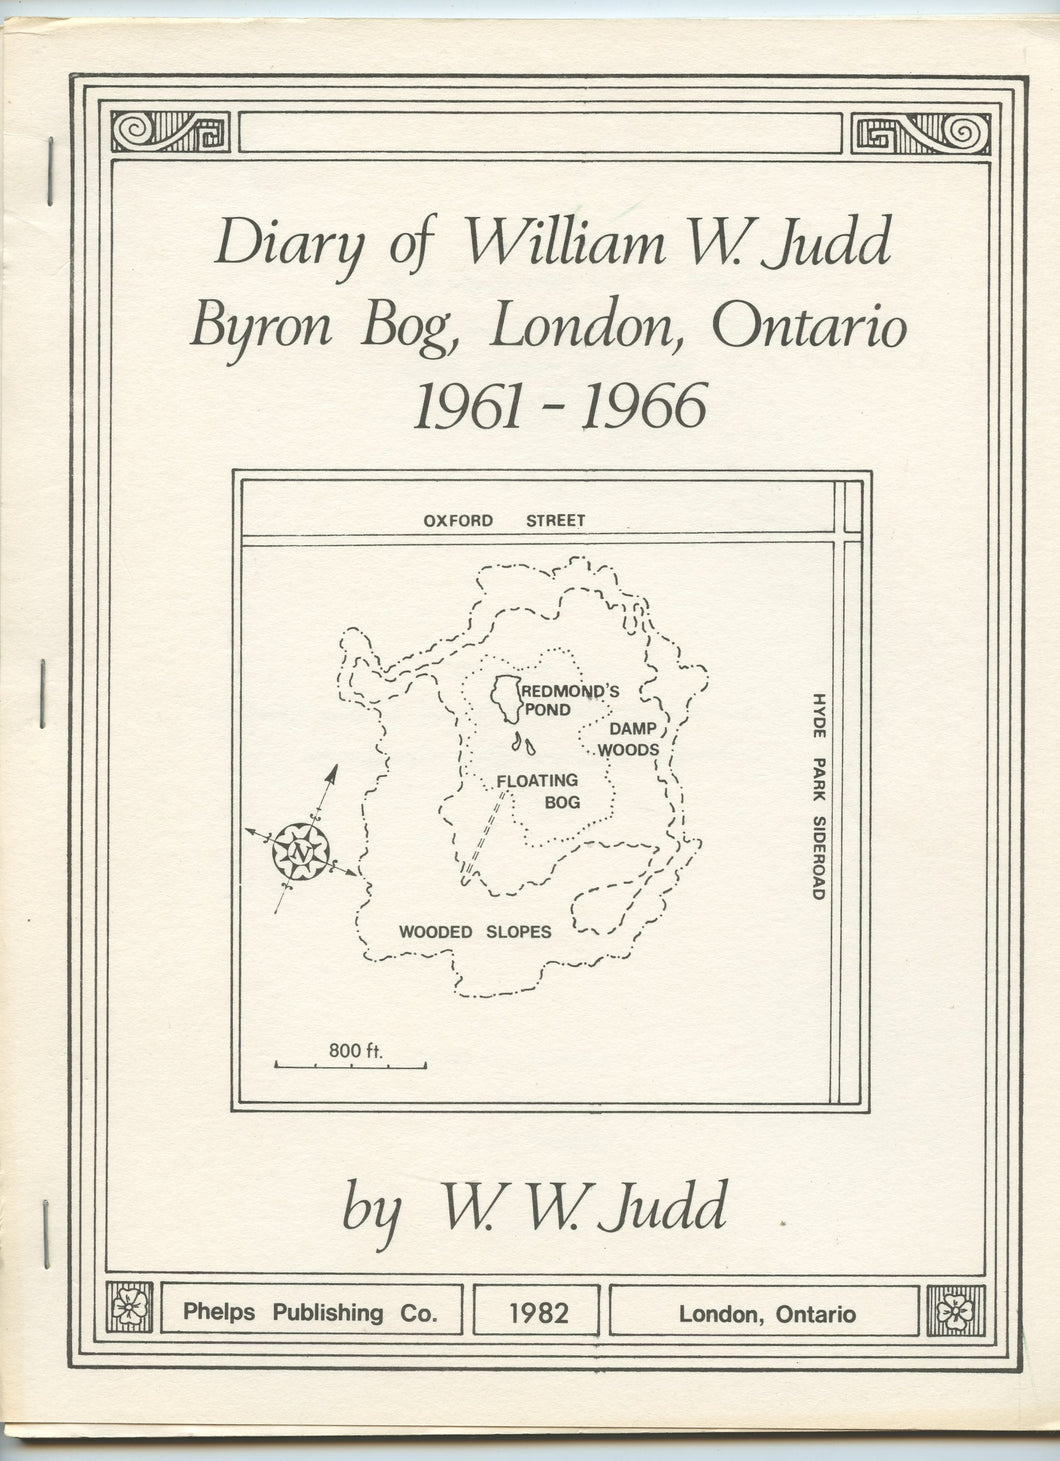 Diary of William W. Judd, Byron Bog, London, Ontario, 1961-1966